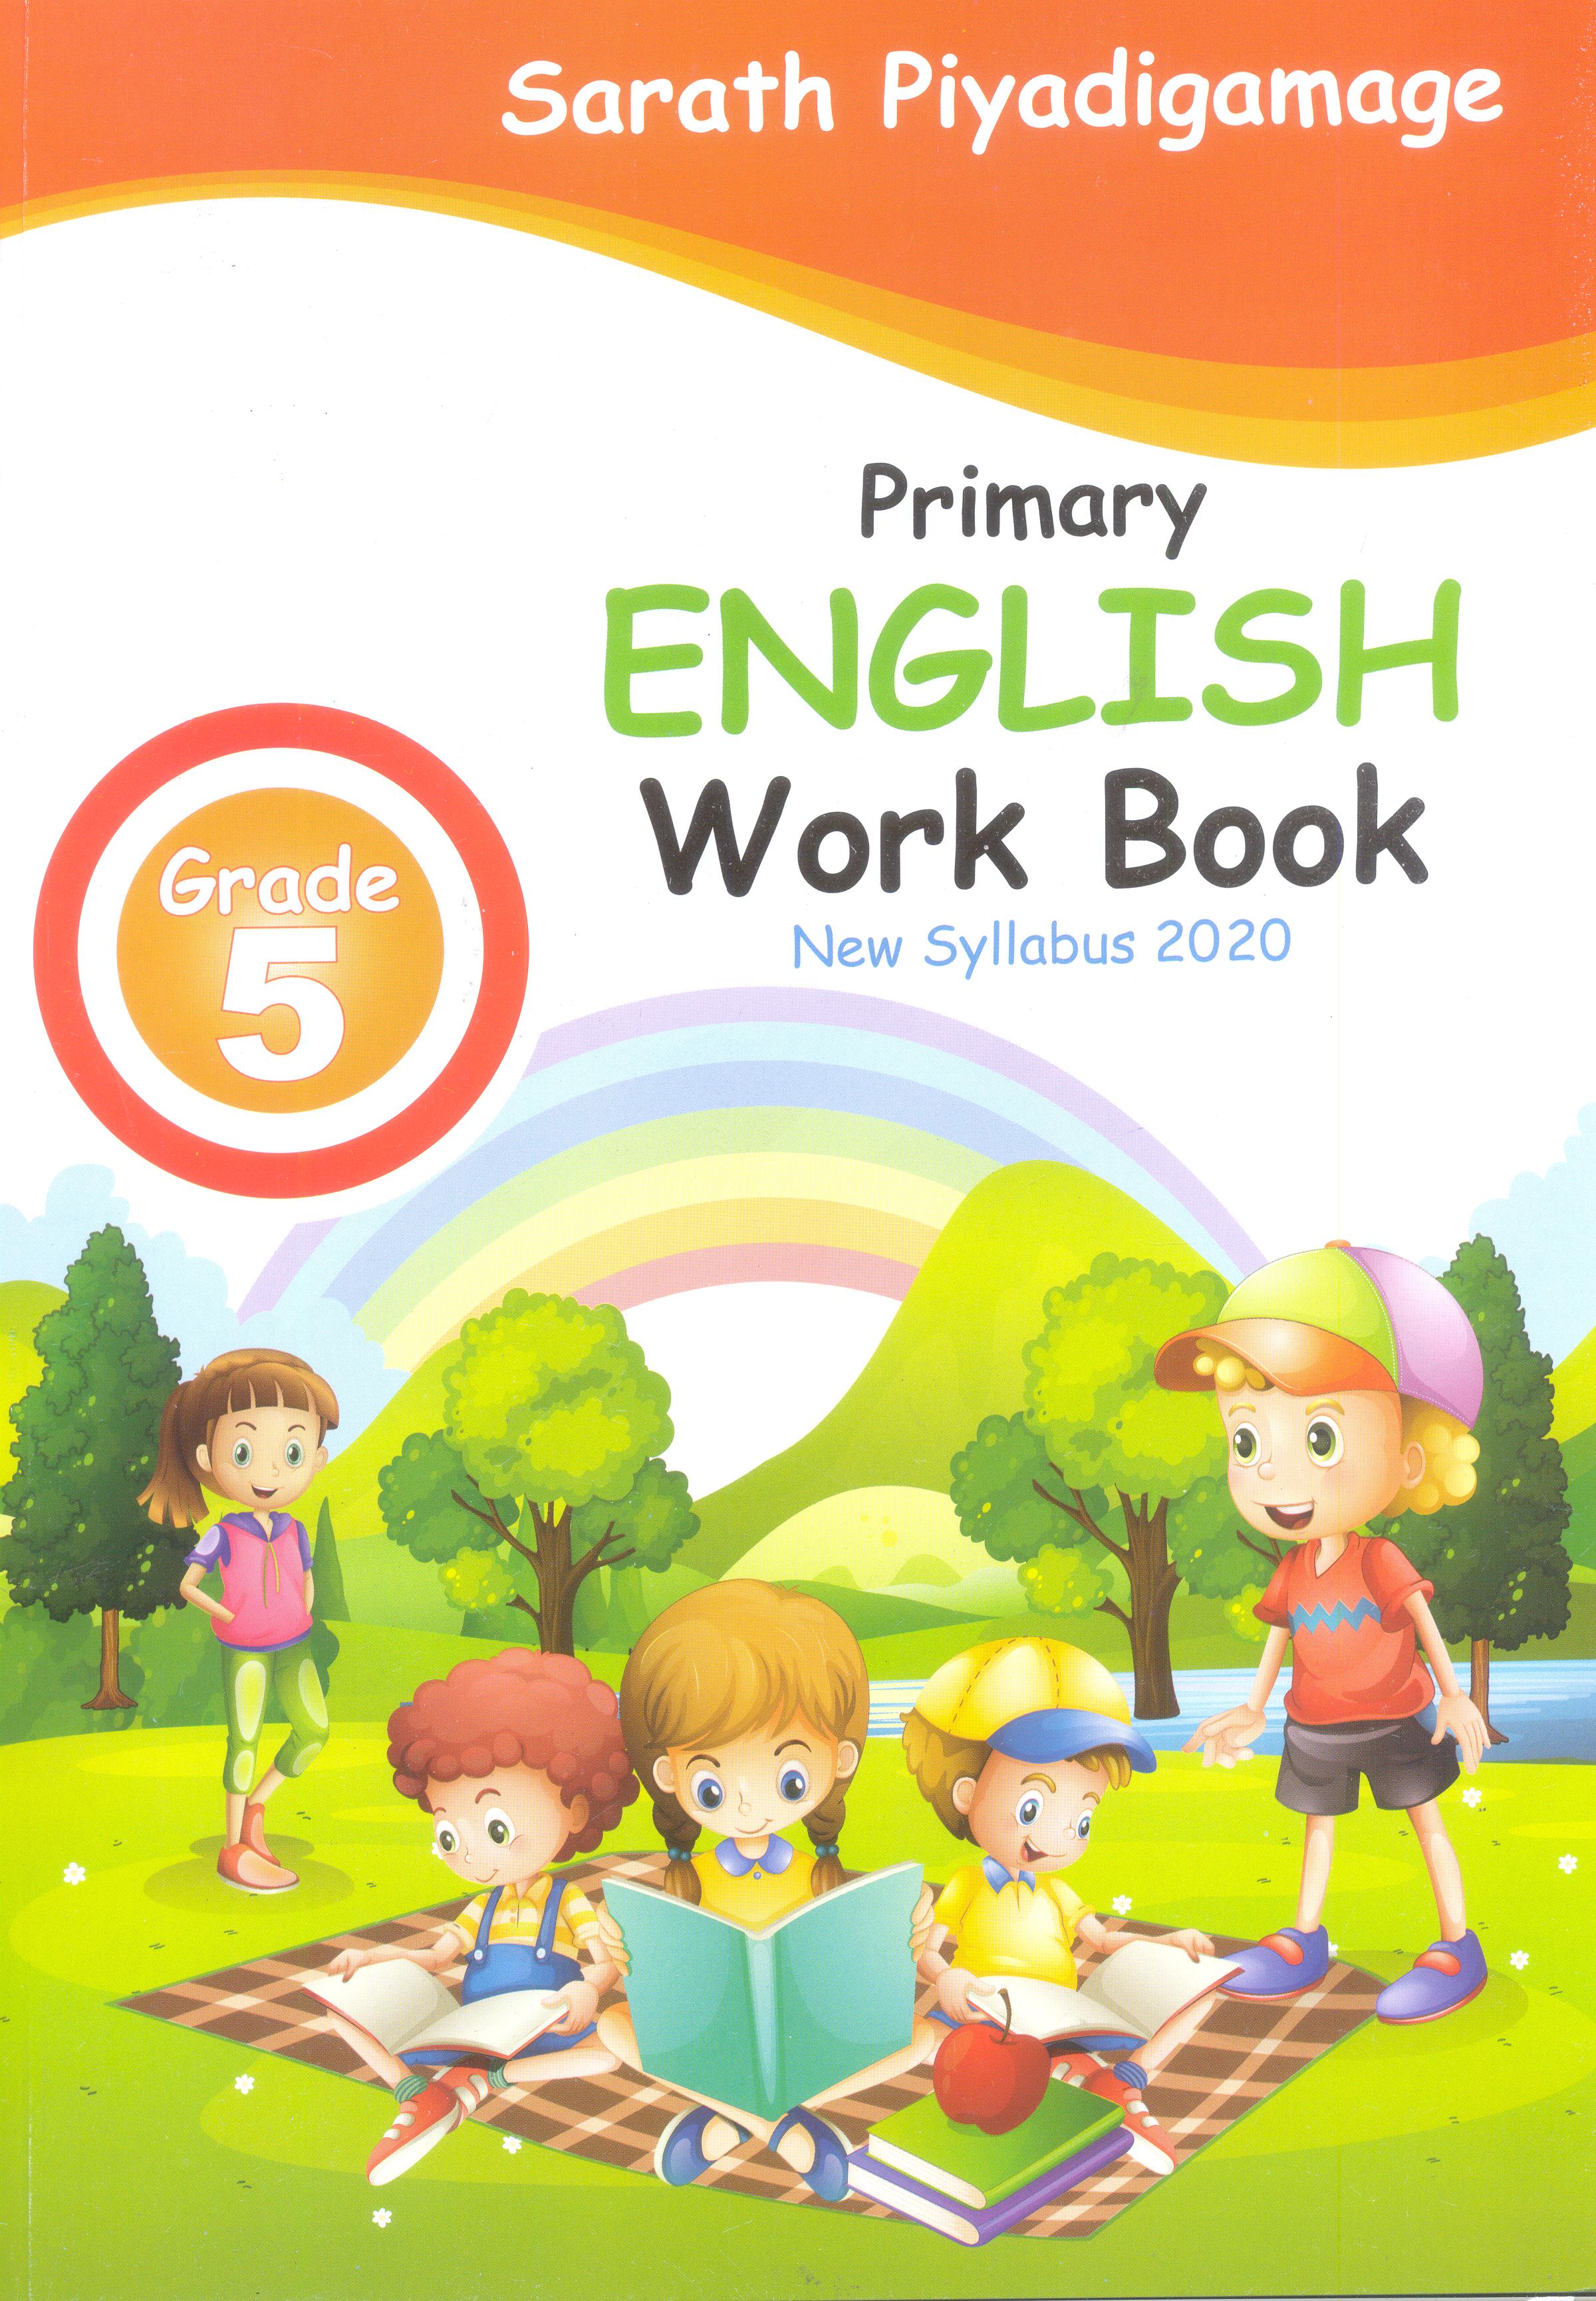 Primary English Work Book Grade 5 ( New Syllabus 2020 )